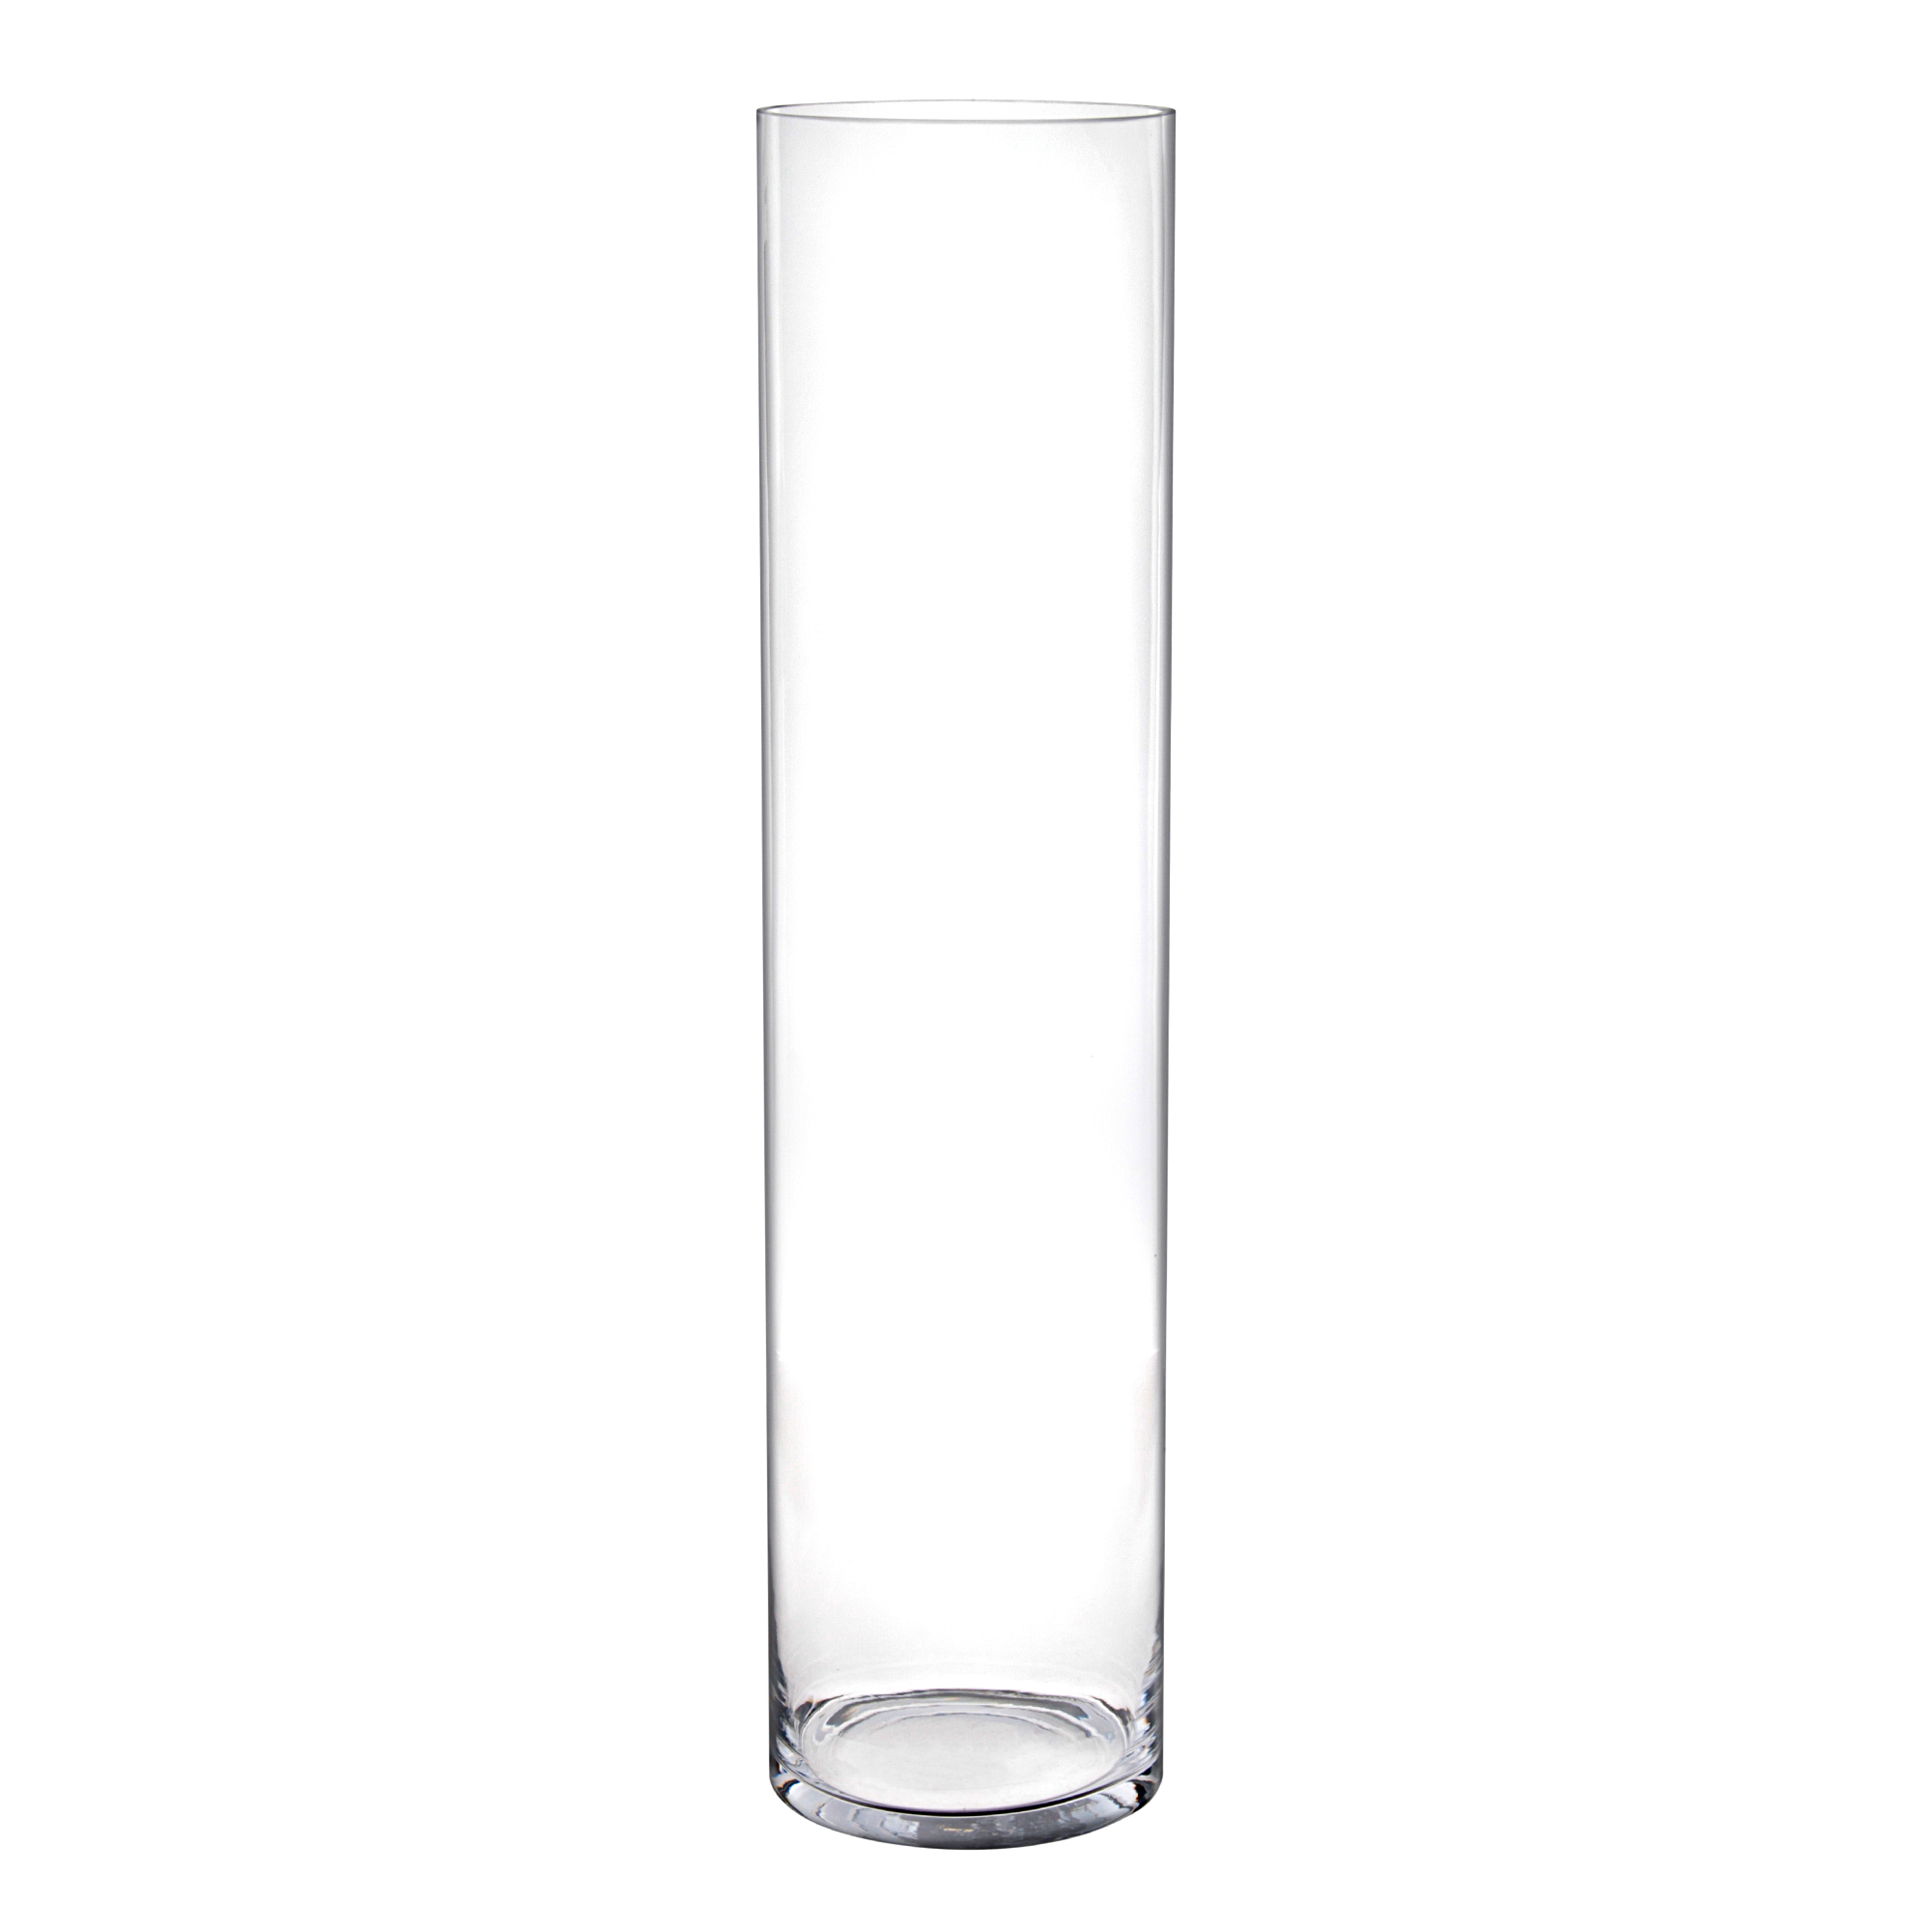 Ваза Hakbijl glass cylinder 80см